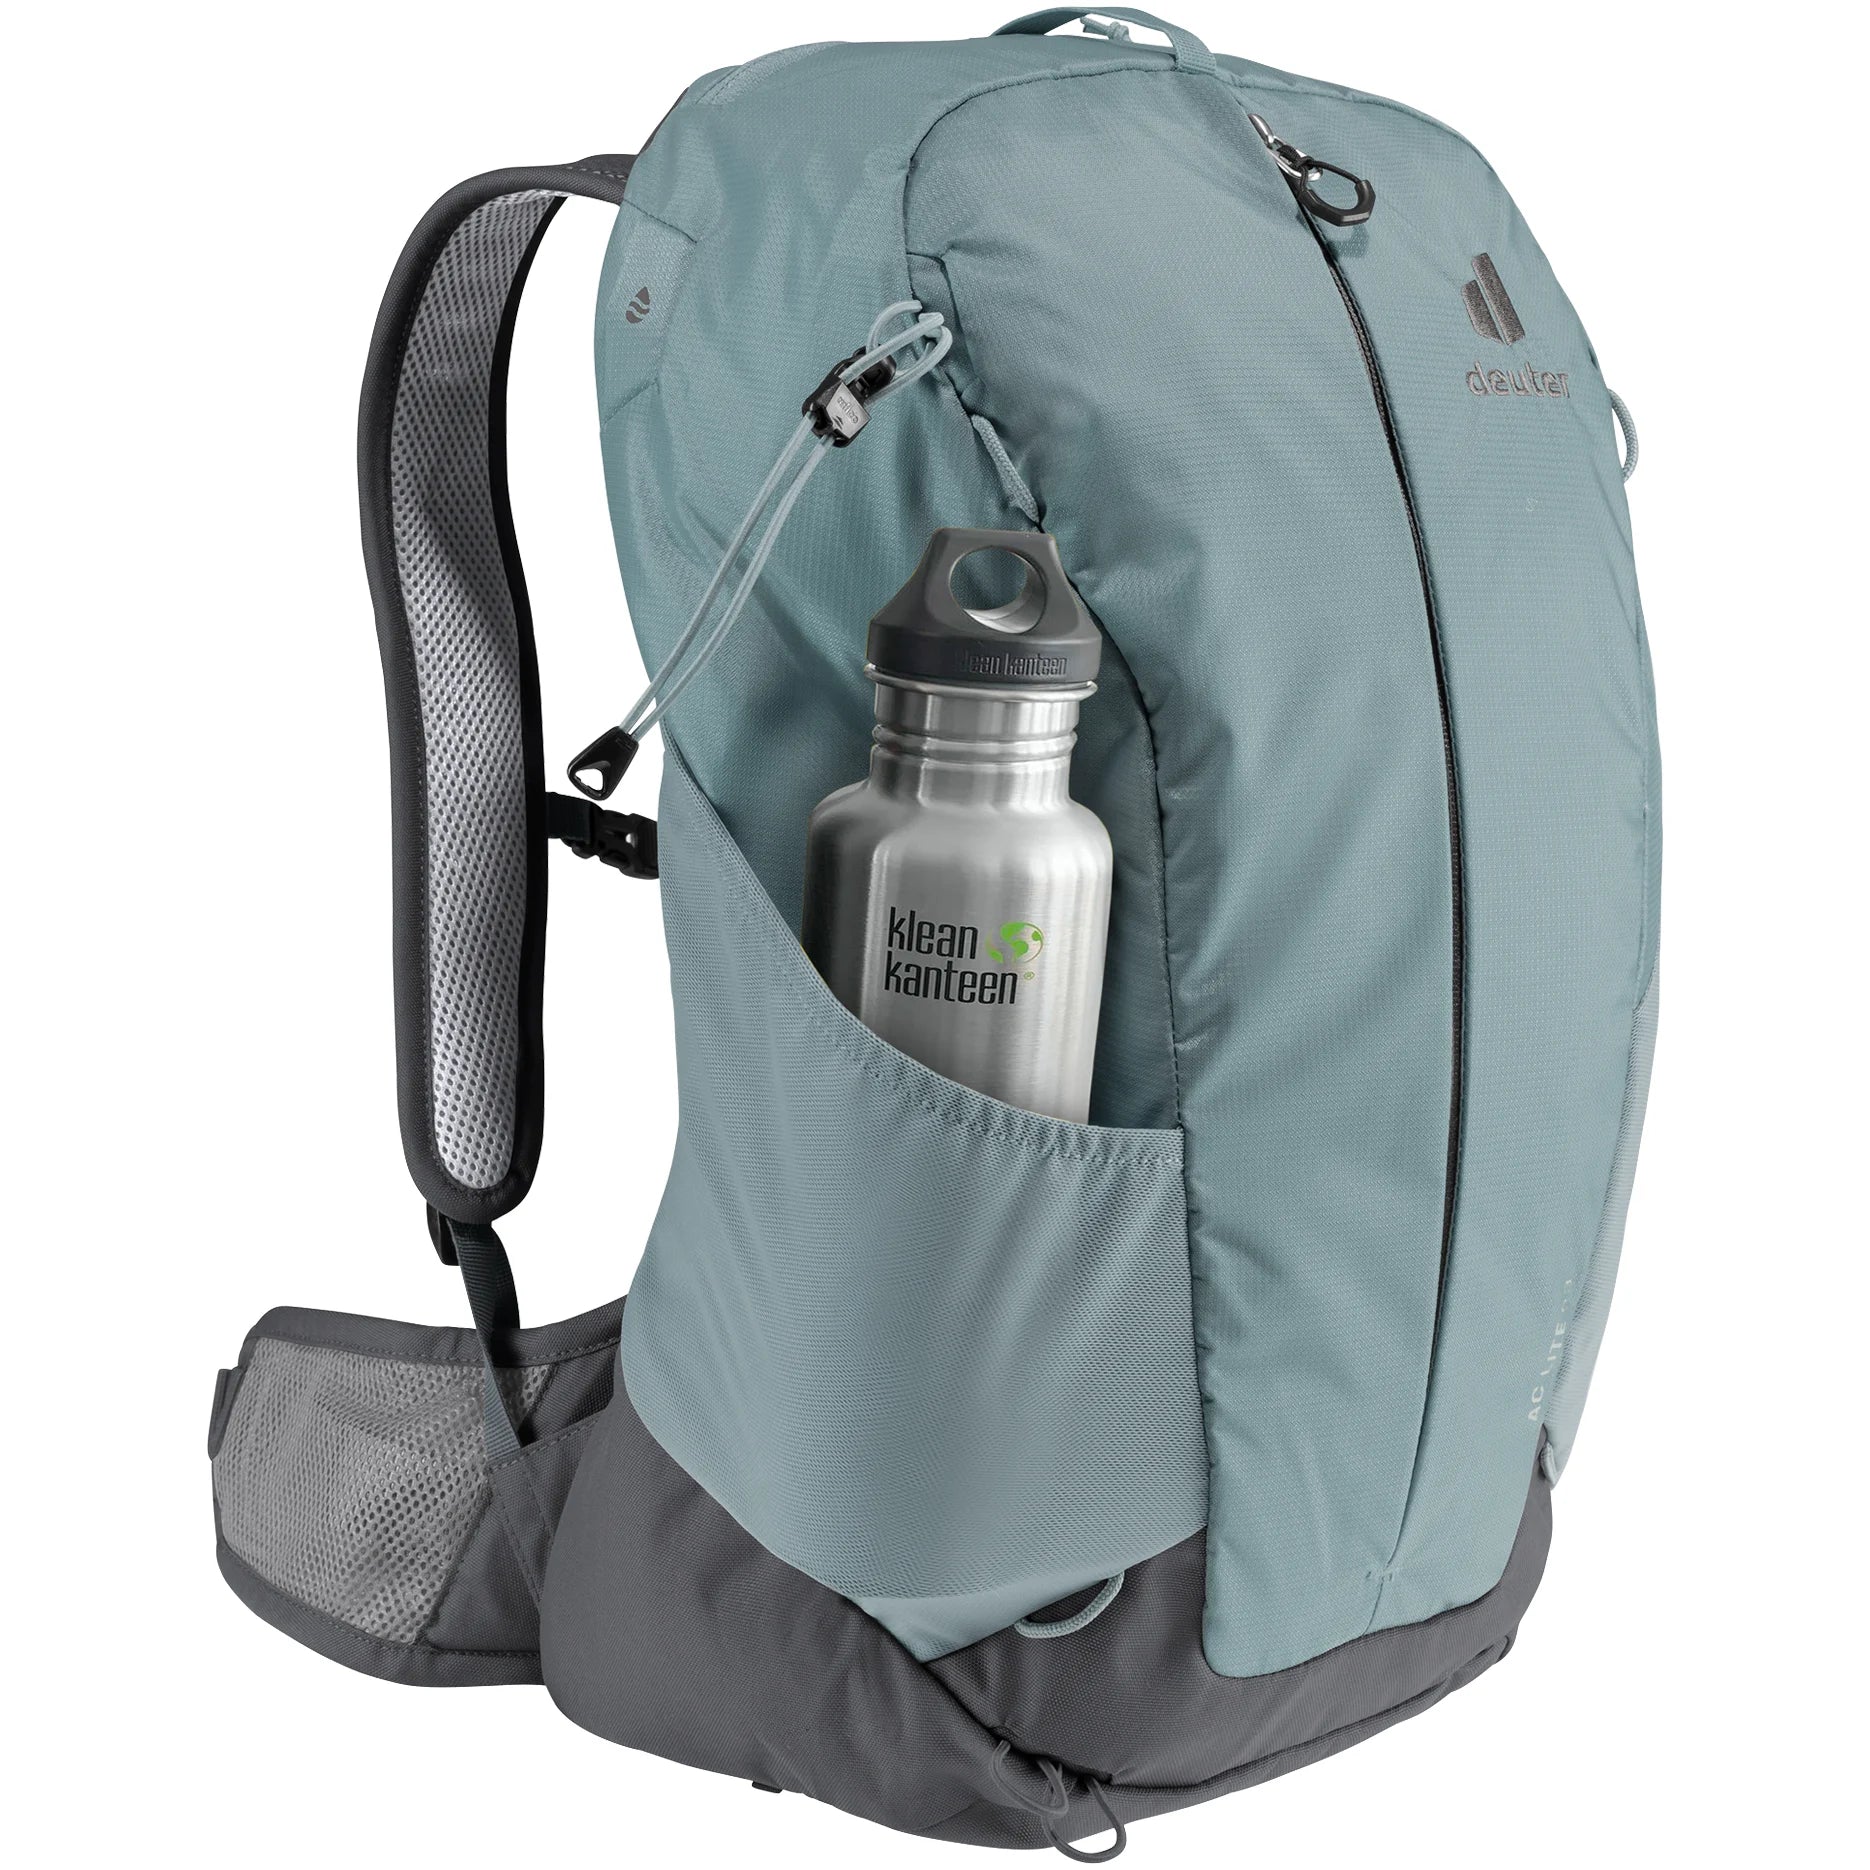 Deuter Travel AC Lite 23 hiking backpack 52 cm - Black